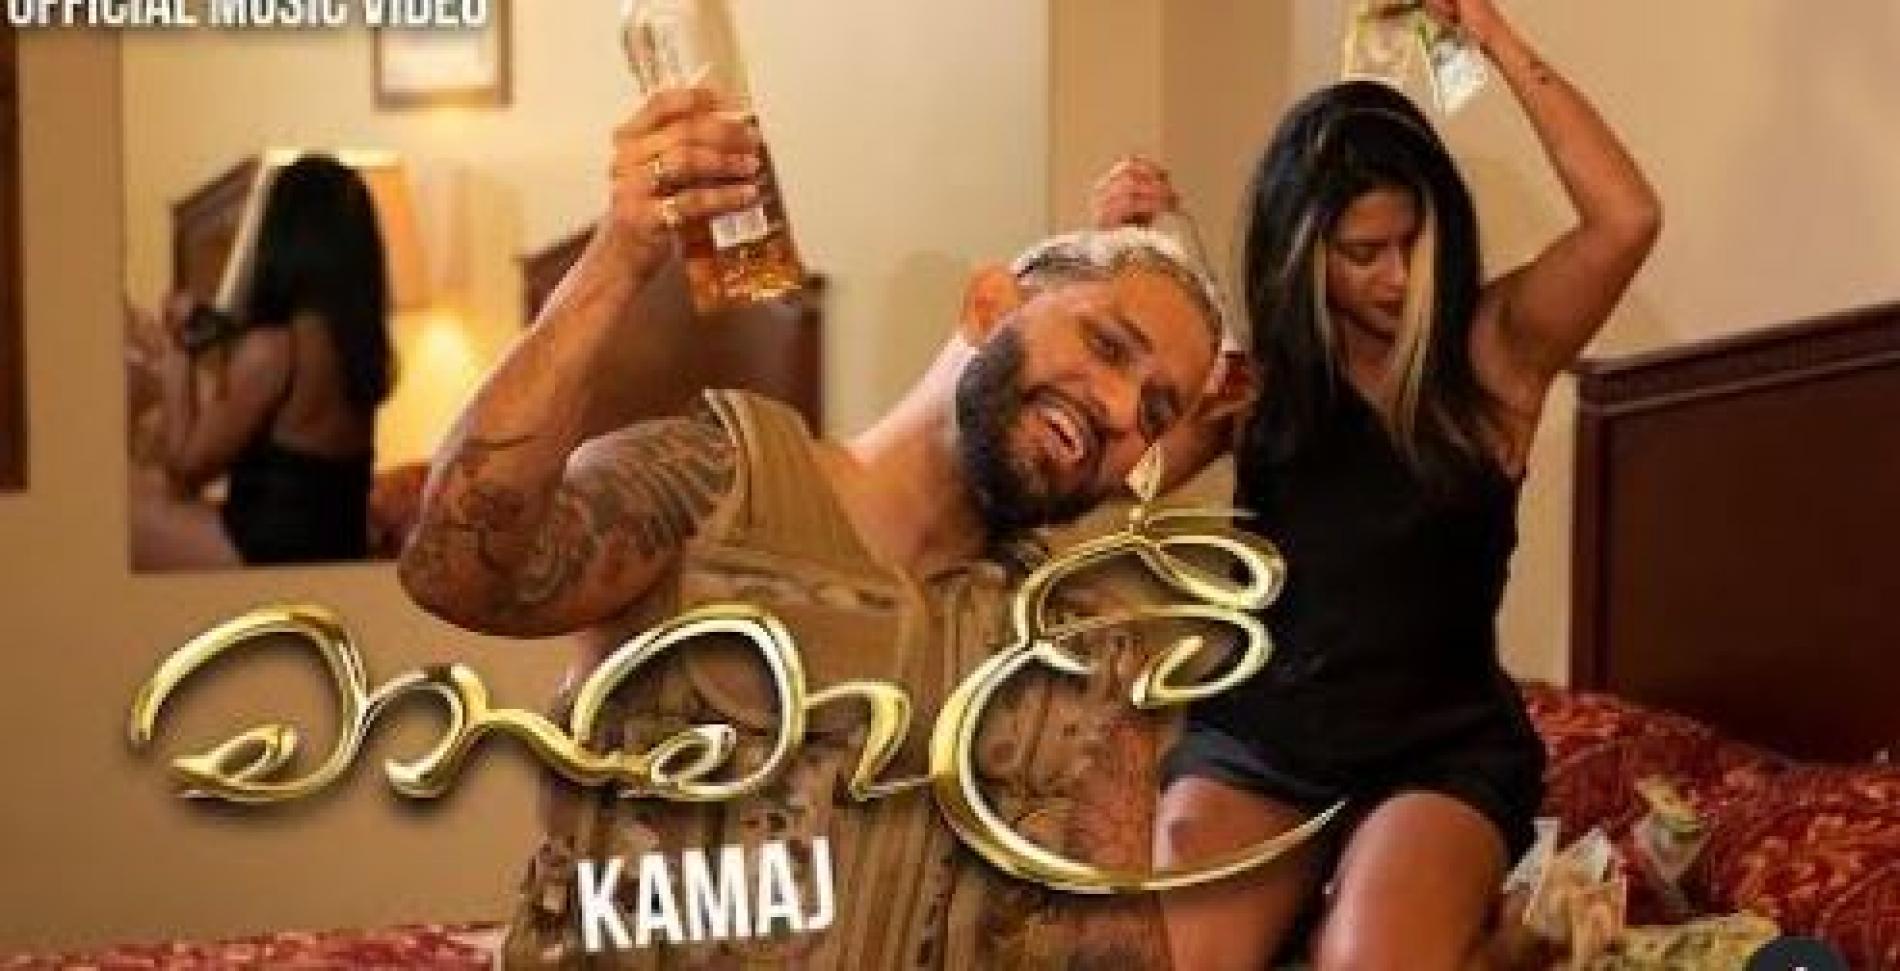 New Music : Manamali (මනමාලී) Official Music Video – KAMAJ